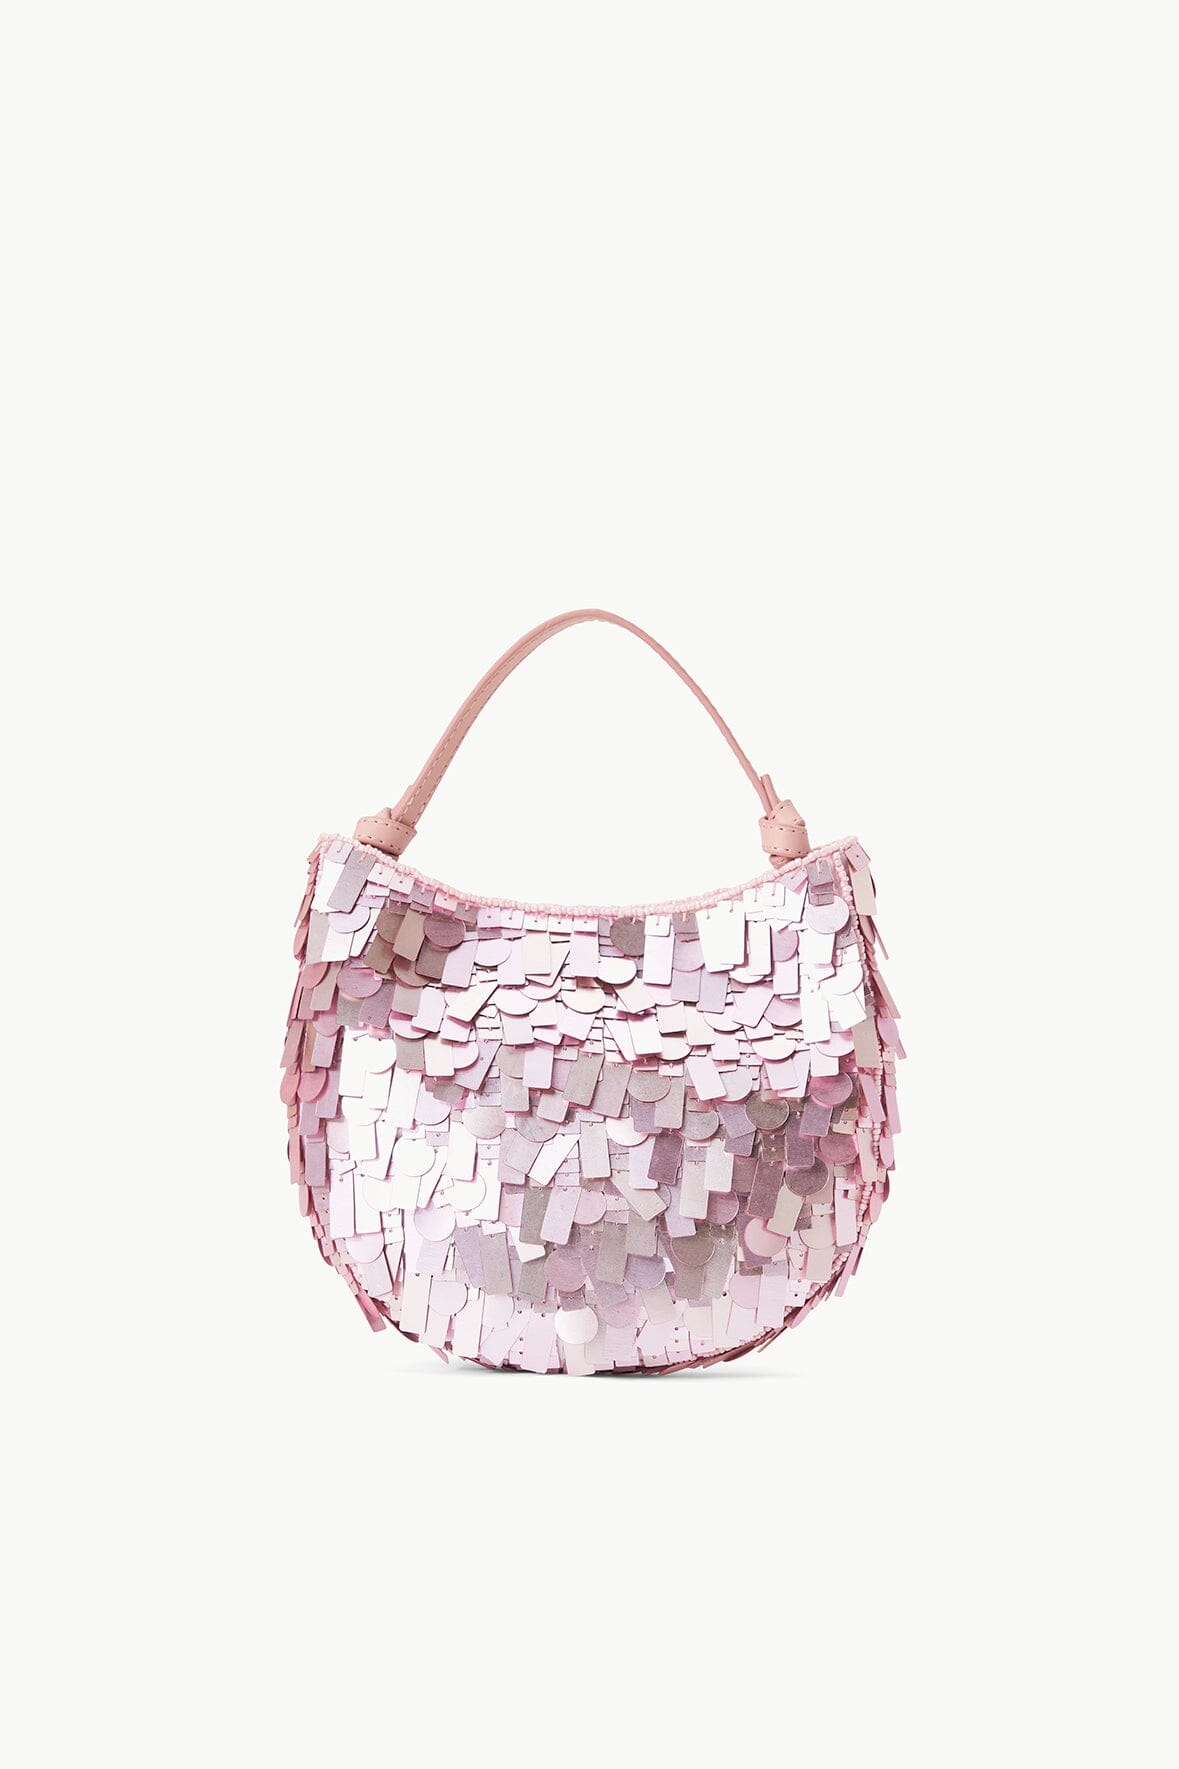 Sequins Pink Box Bag Acrylic Clutch Bag Glitter Purse Evening